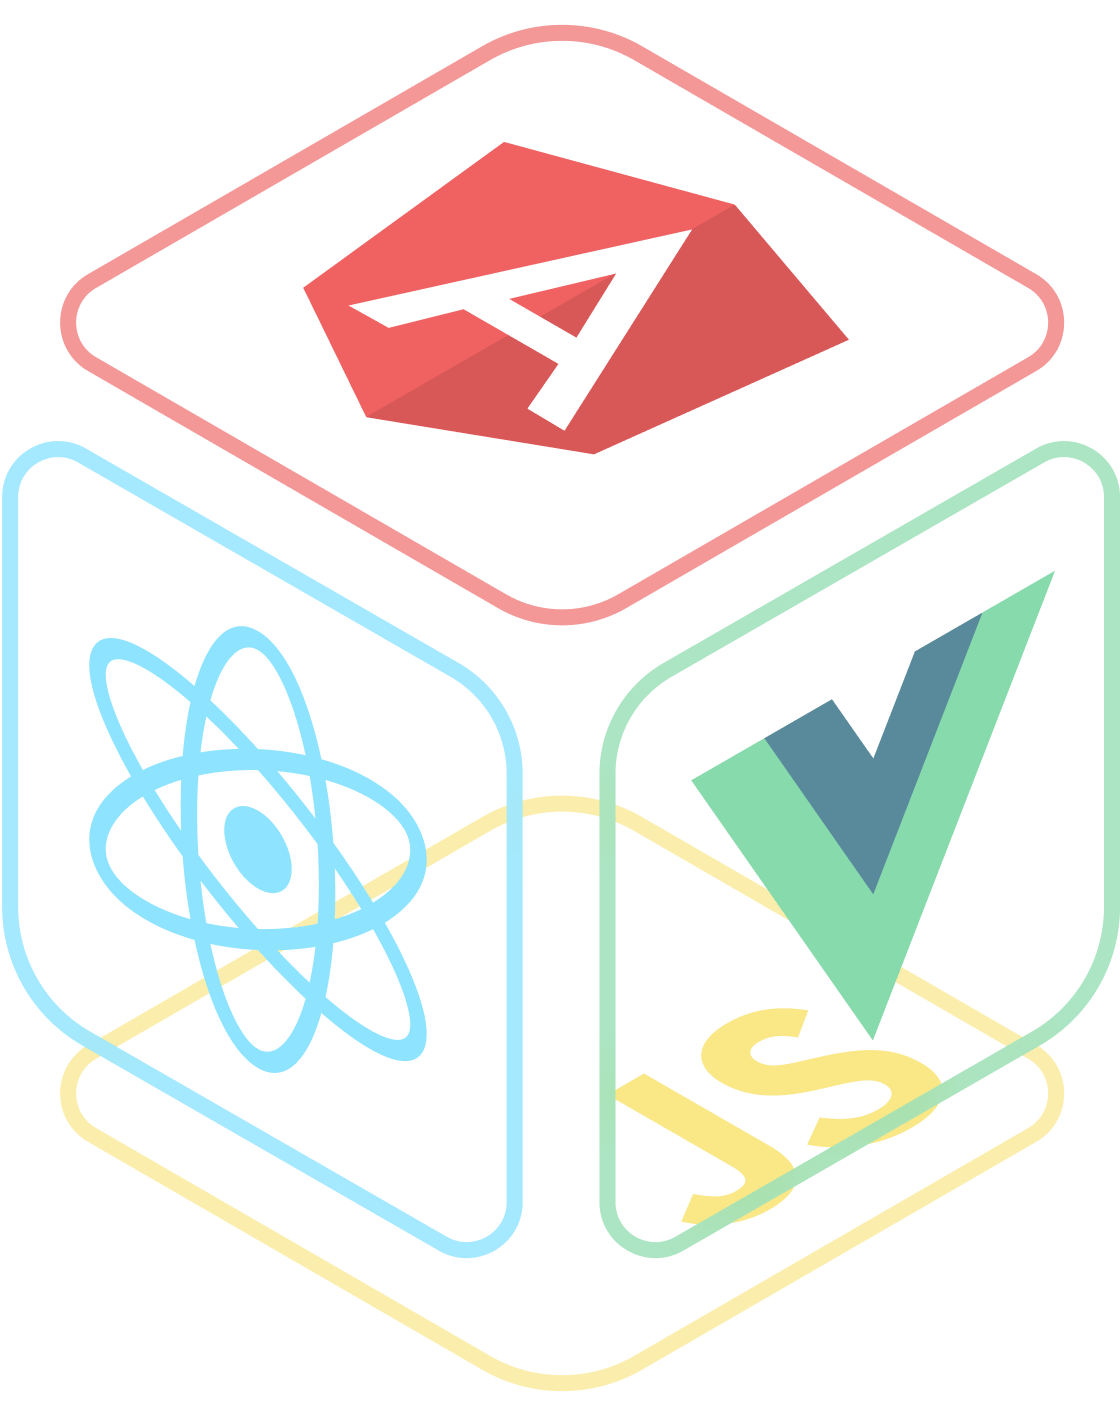 Angular, React, Vue, and Plain 'ole Javascript